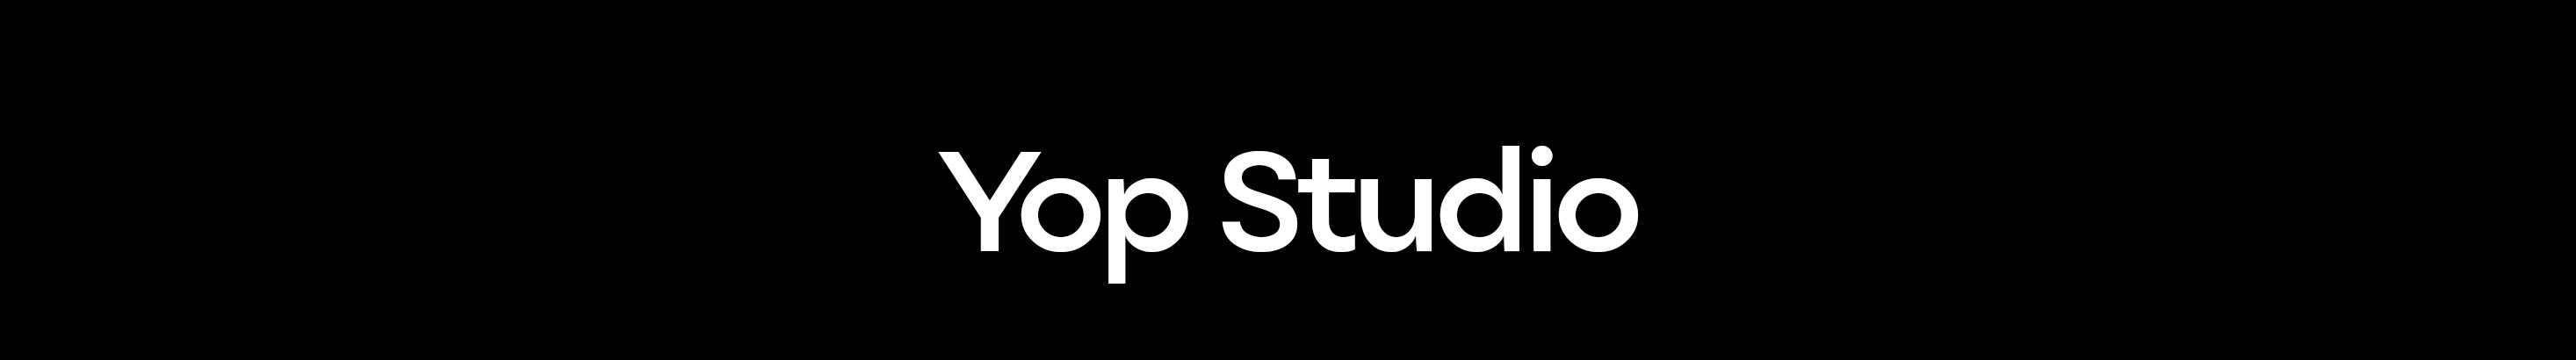 Yop Studio's profile banner